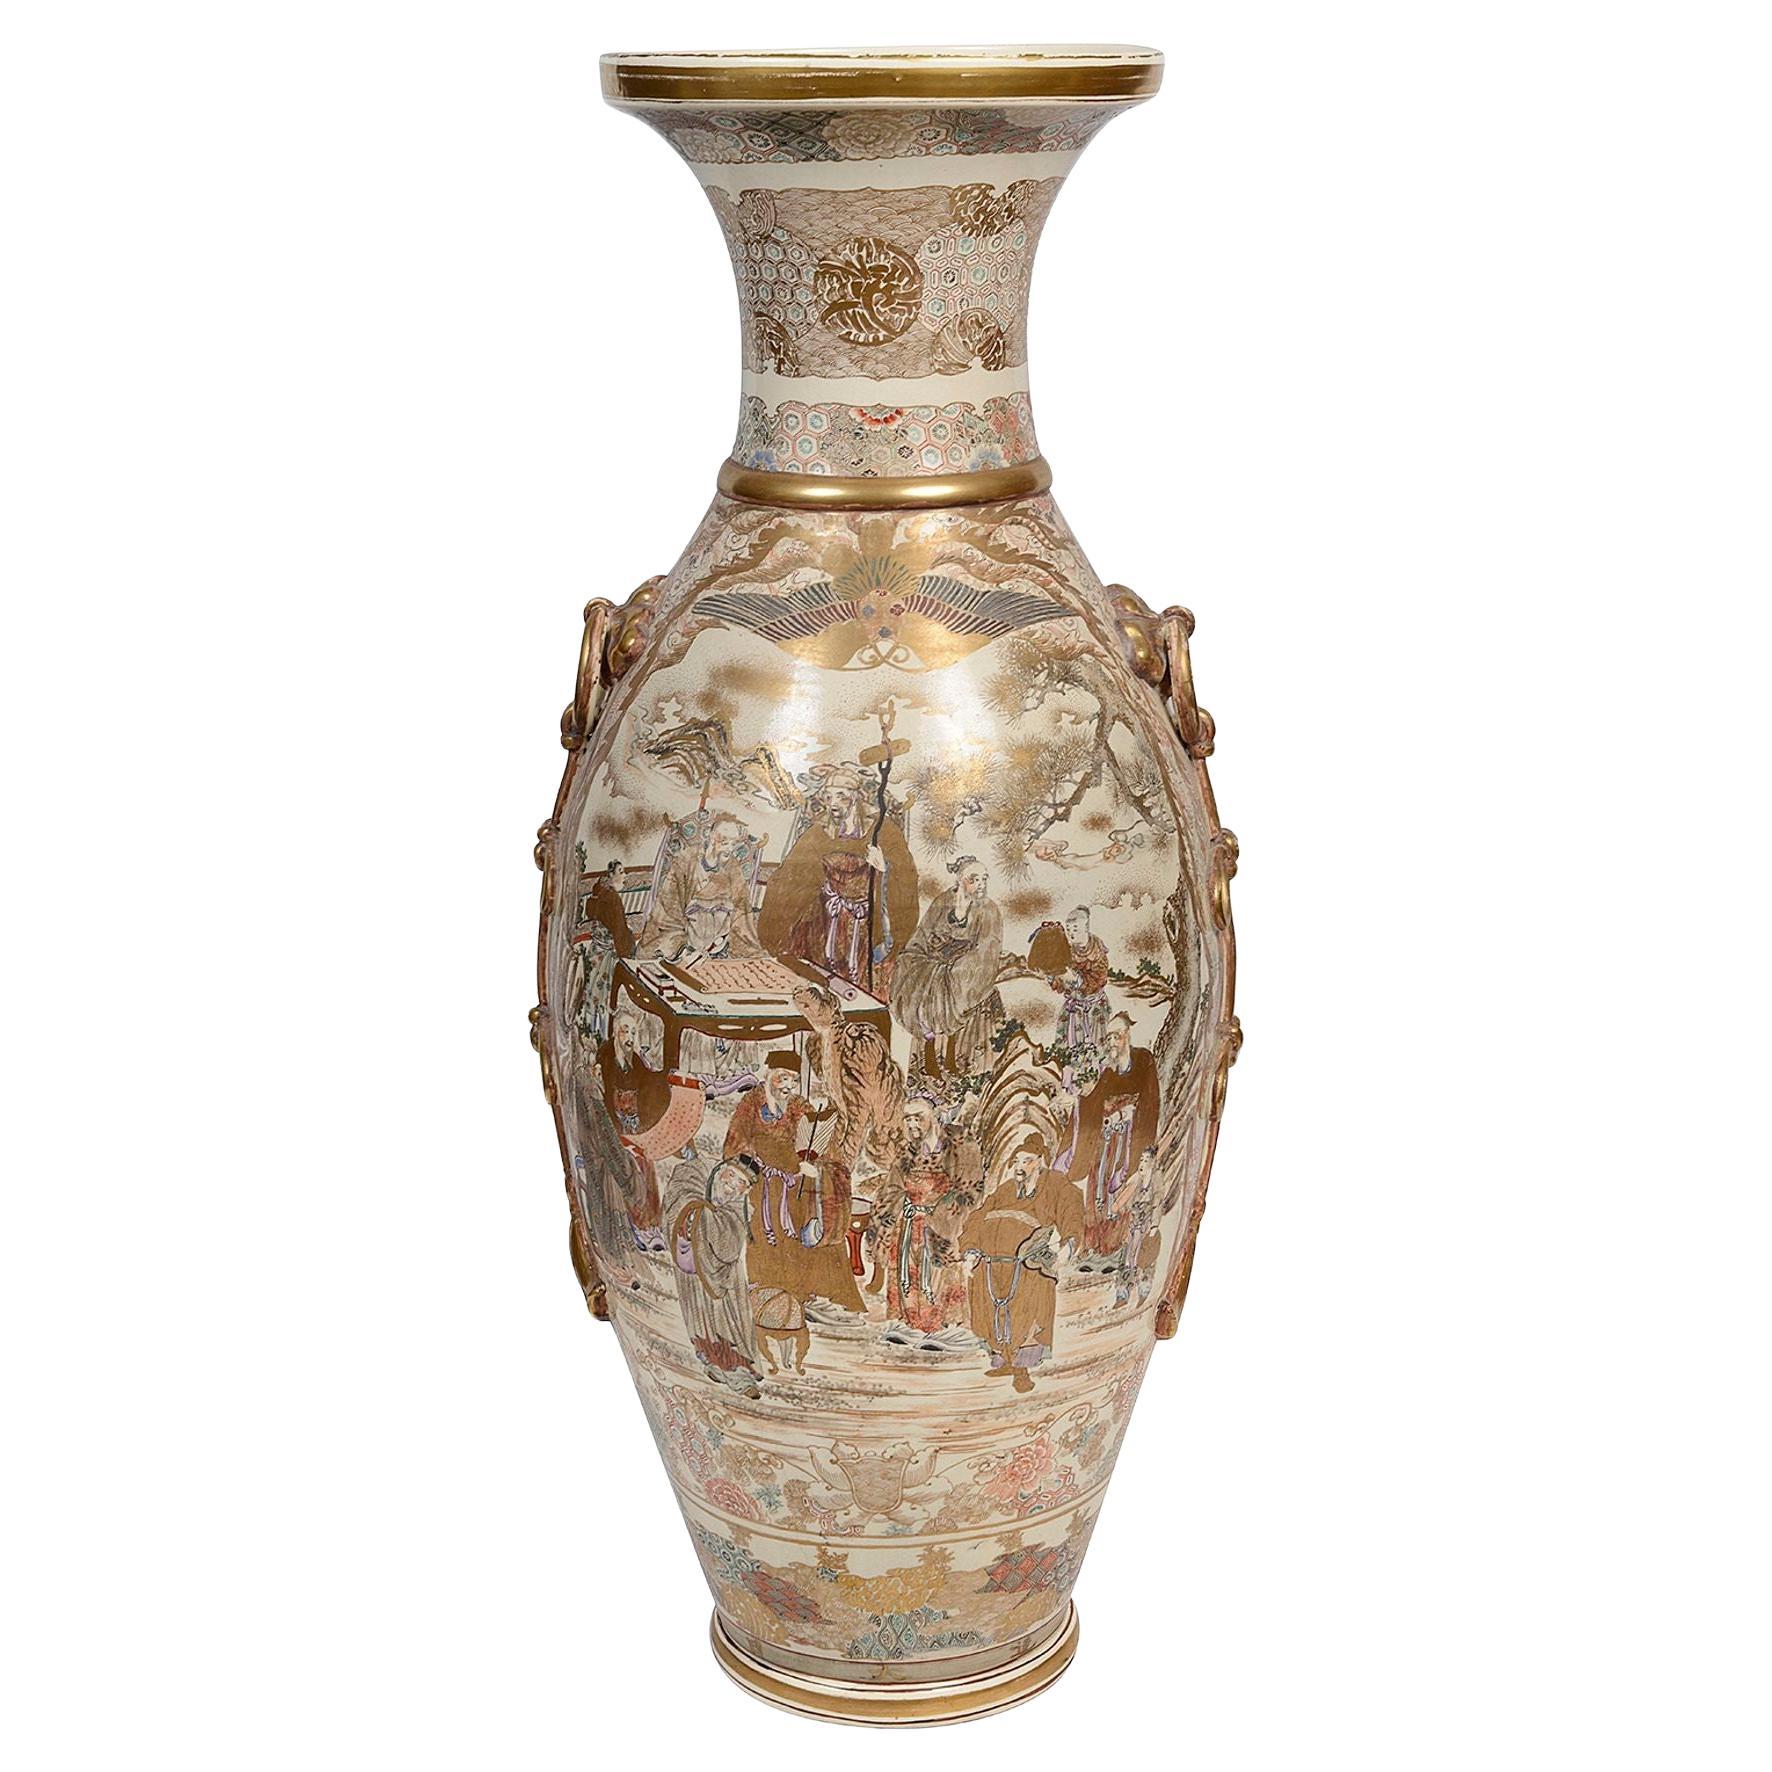 Große Satsuma-Vase aus dem 19. Jahrhundert.